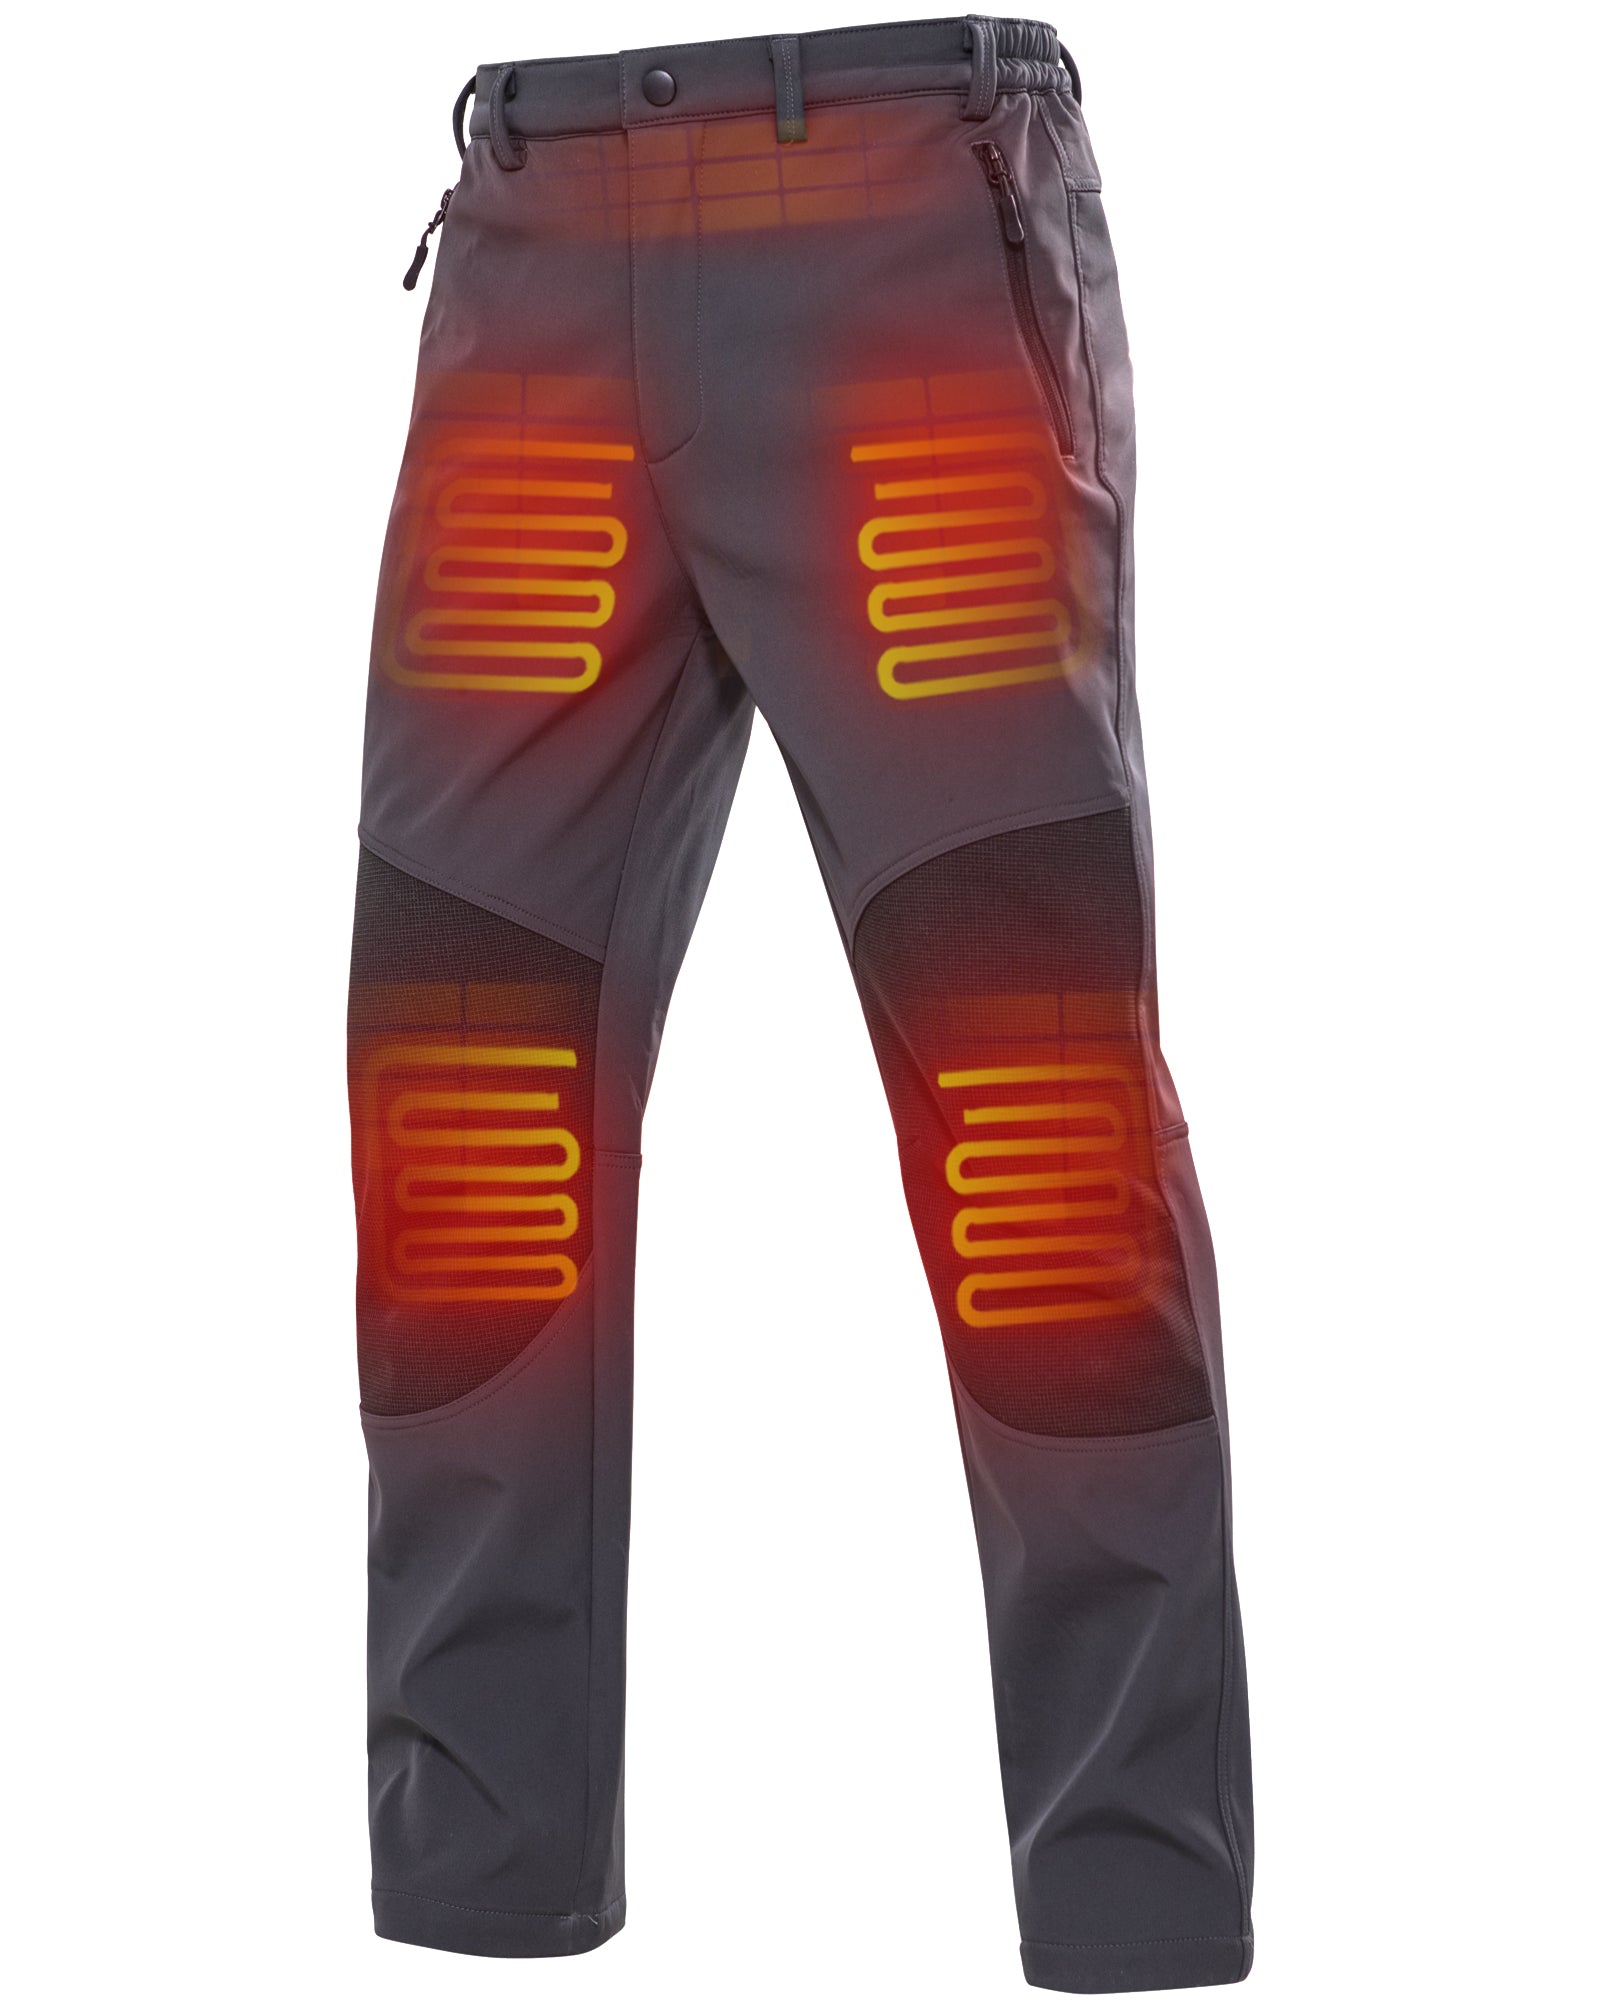 DEWBU® Men's Soft Shell Heated Pants with 12V Battery Pack Fleece